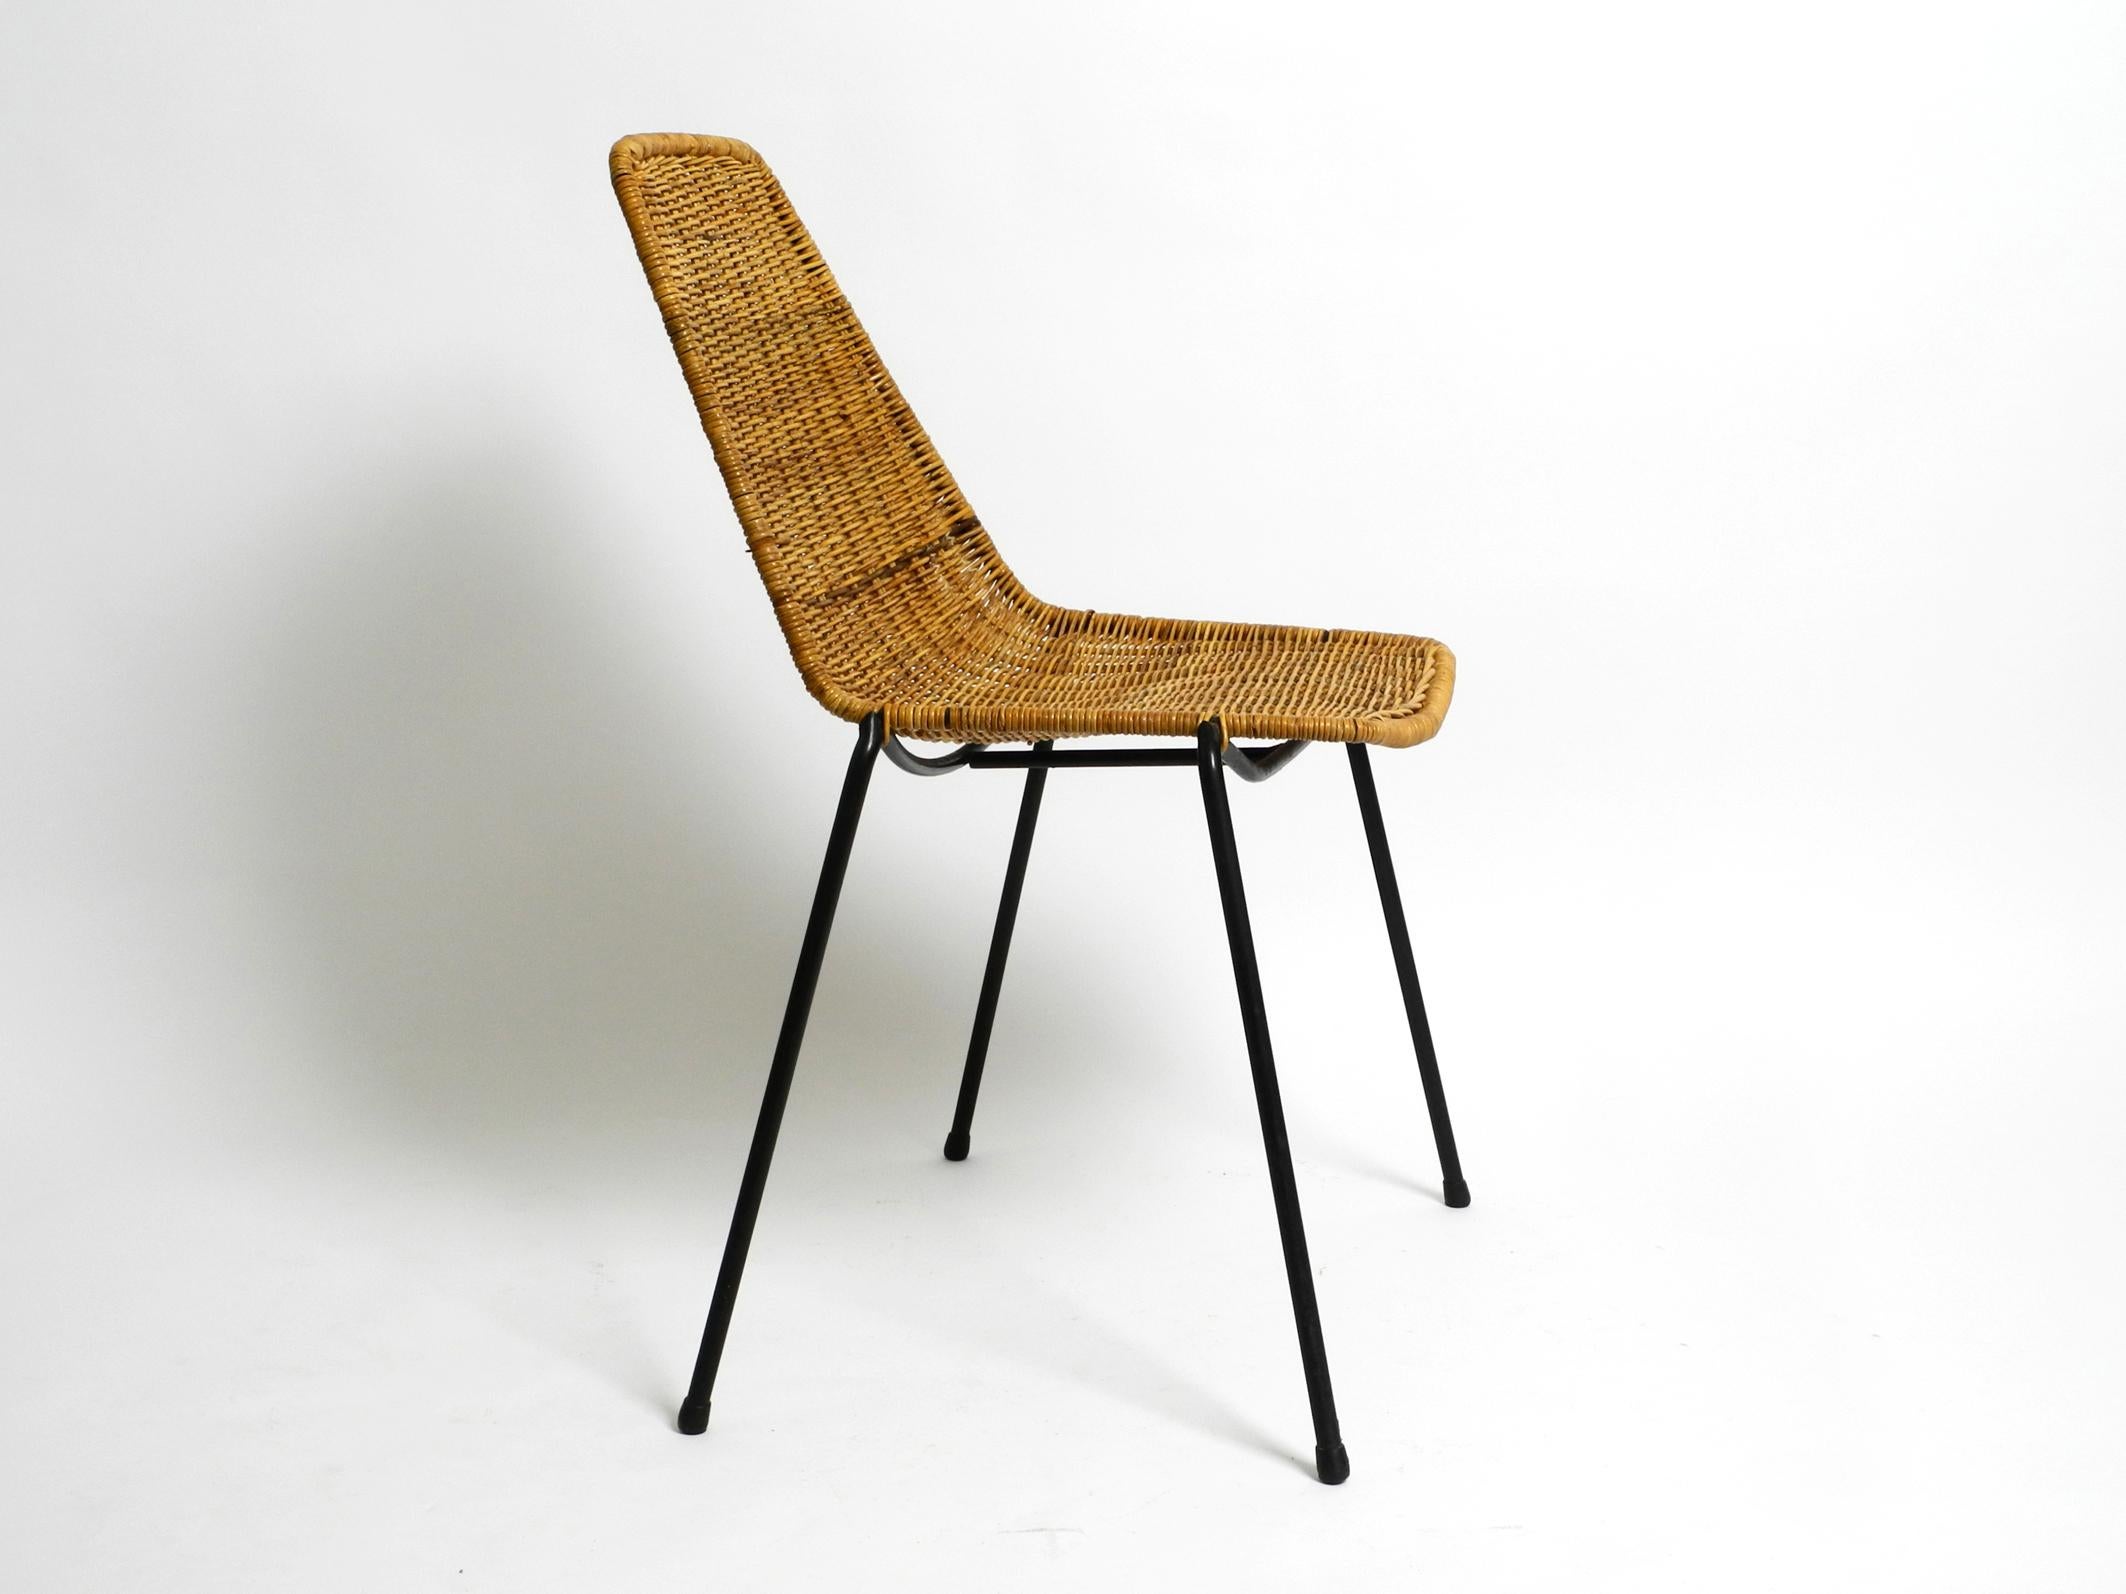 Original Italian Mid-Century Modern Gian Franco Legler Basket Chair In Good Condition For Sale In München, DE